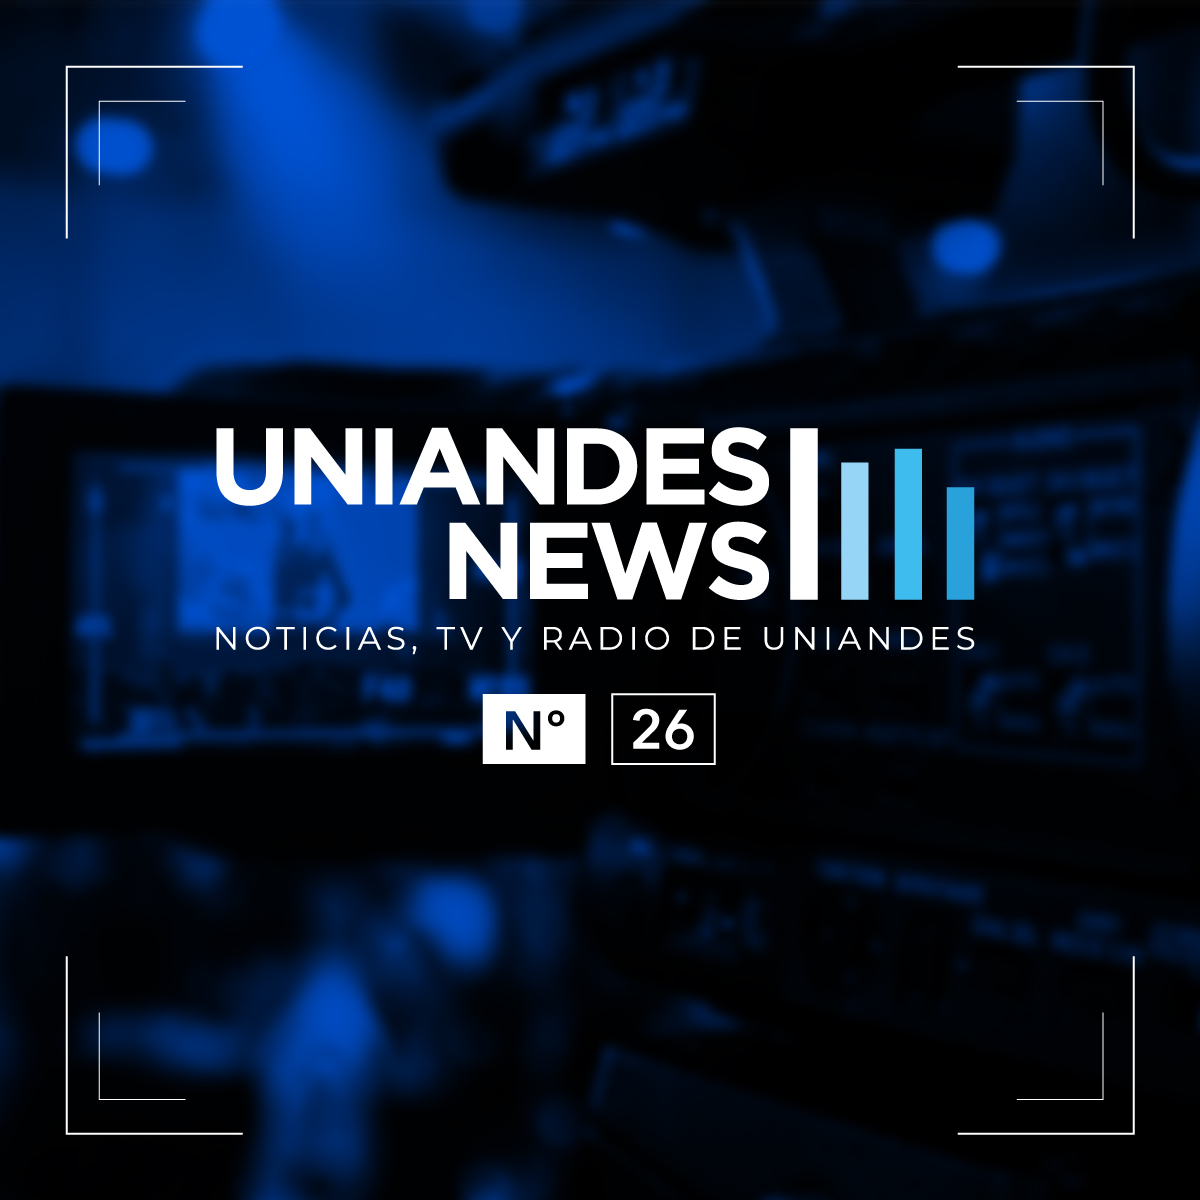 Uniandes news 26